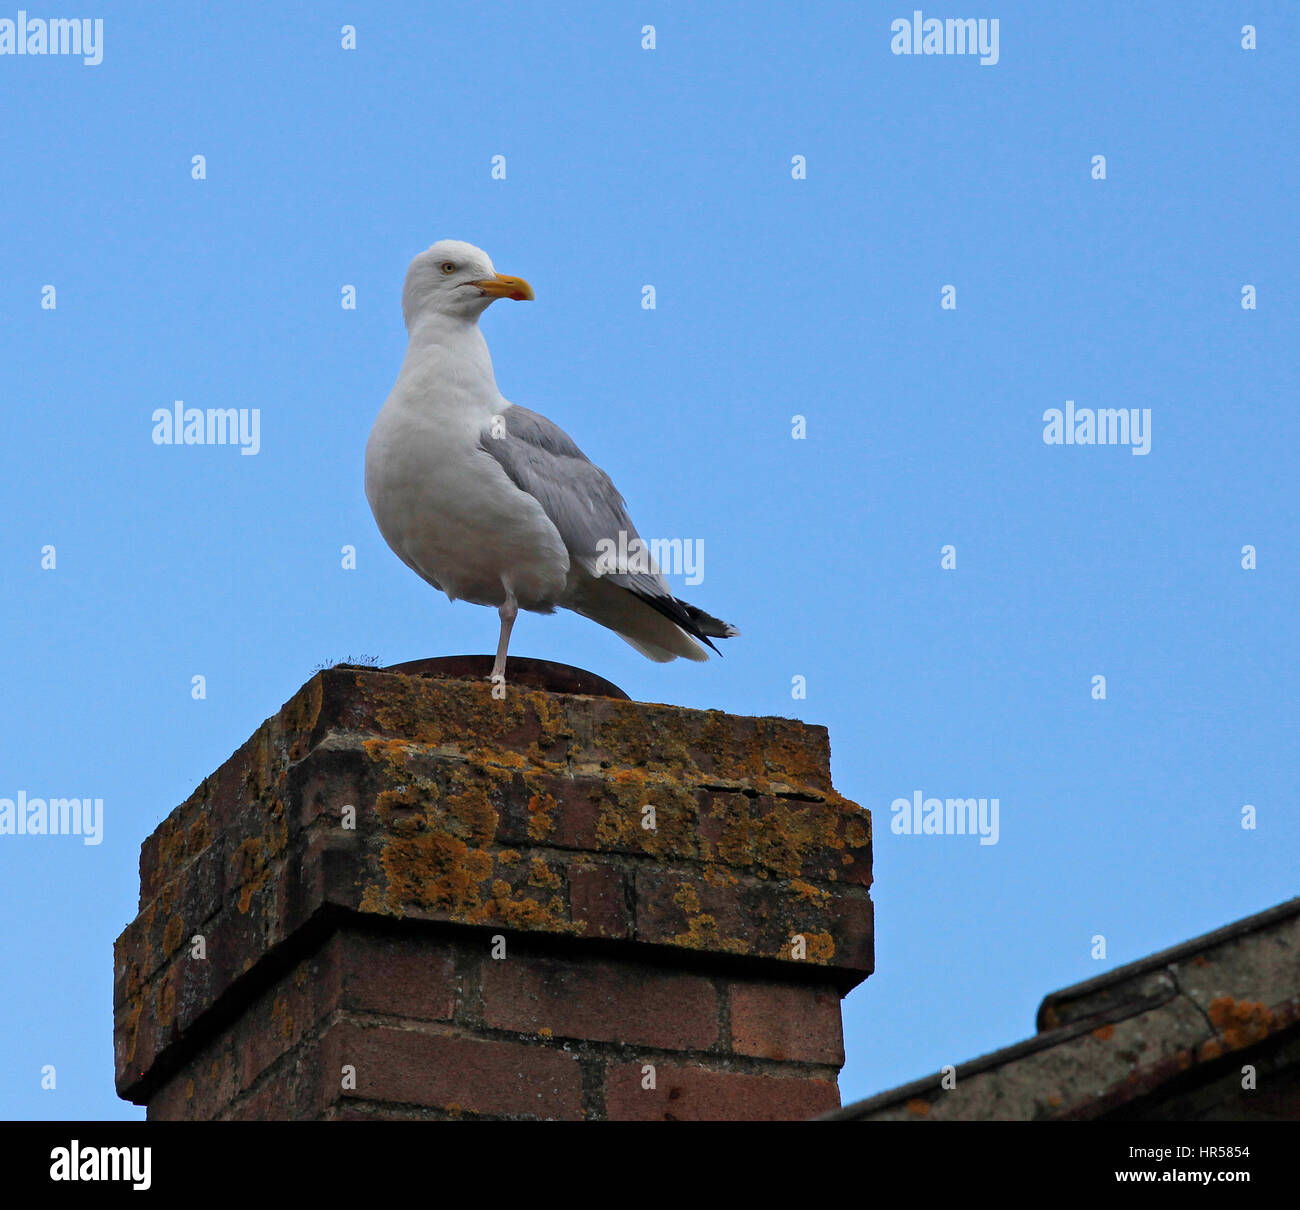 Adult Herring gull on a chimney Stock Photo